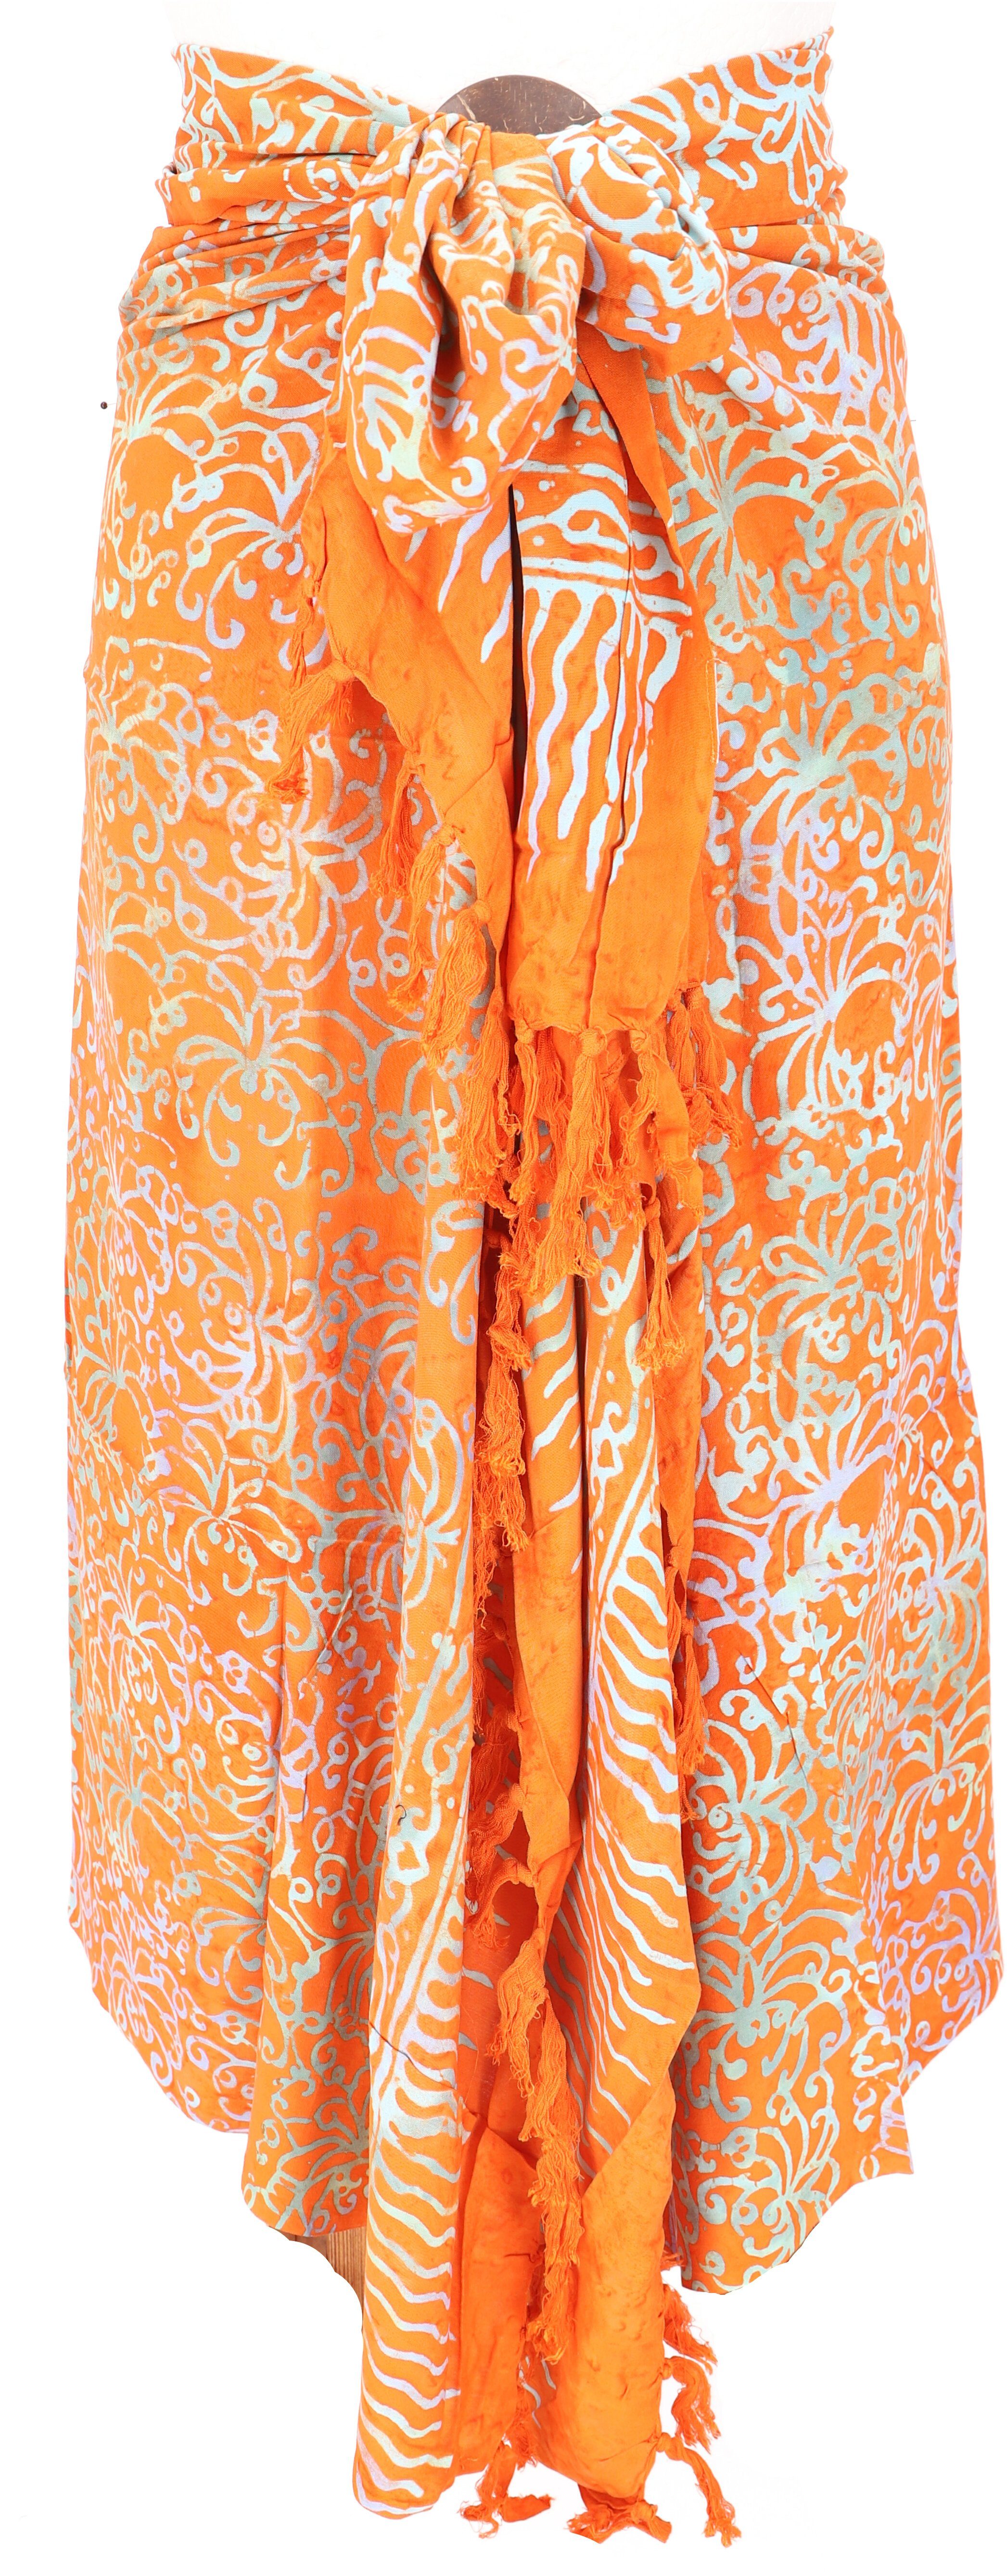 Bali Sarong, Design Sarong Guru-Shop 16/orange Wandbehang, Batik Wickelrock,..